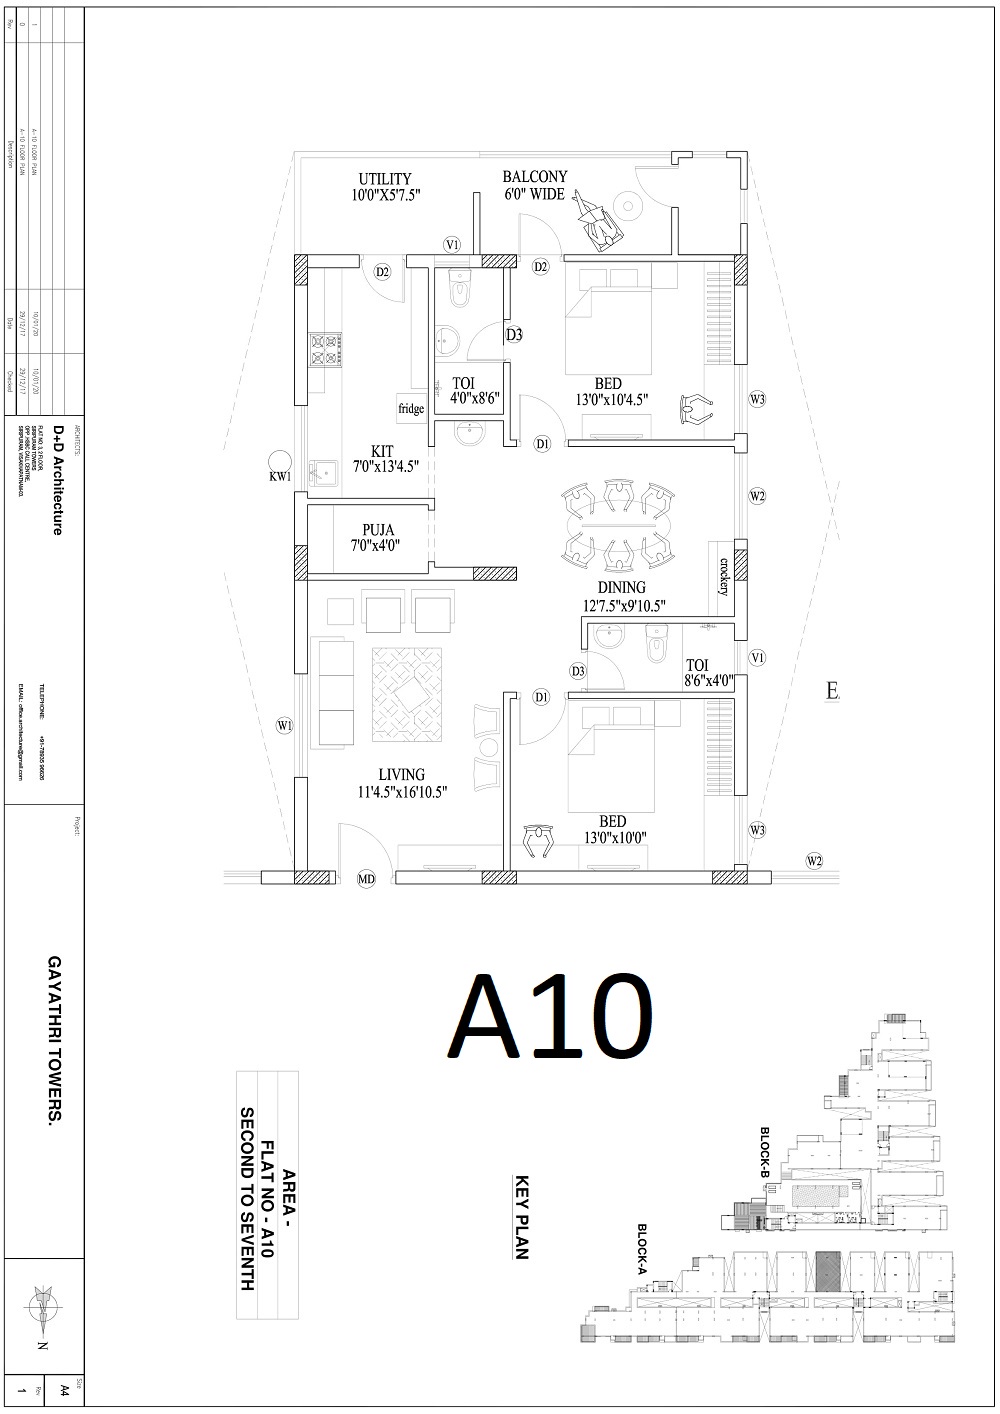 A10 - Tipcal Floor Plan